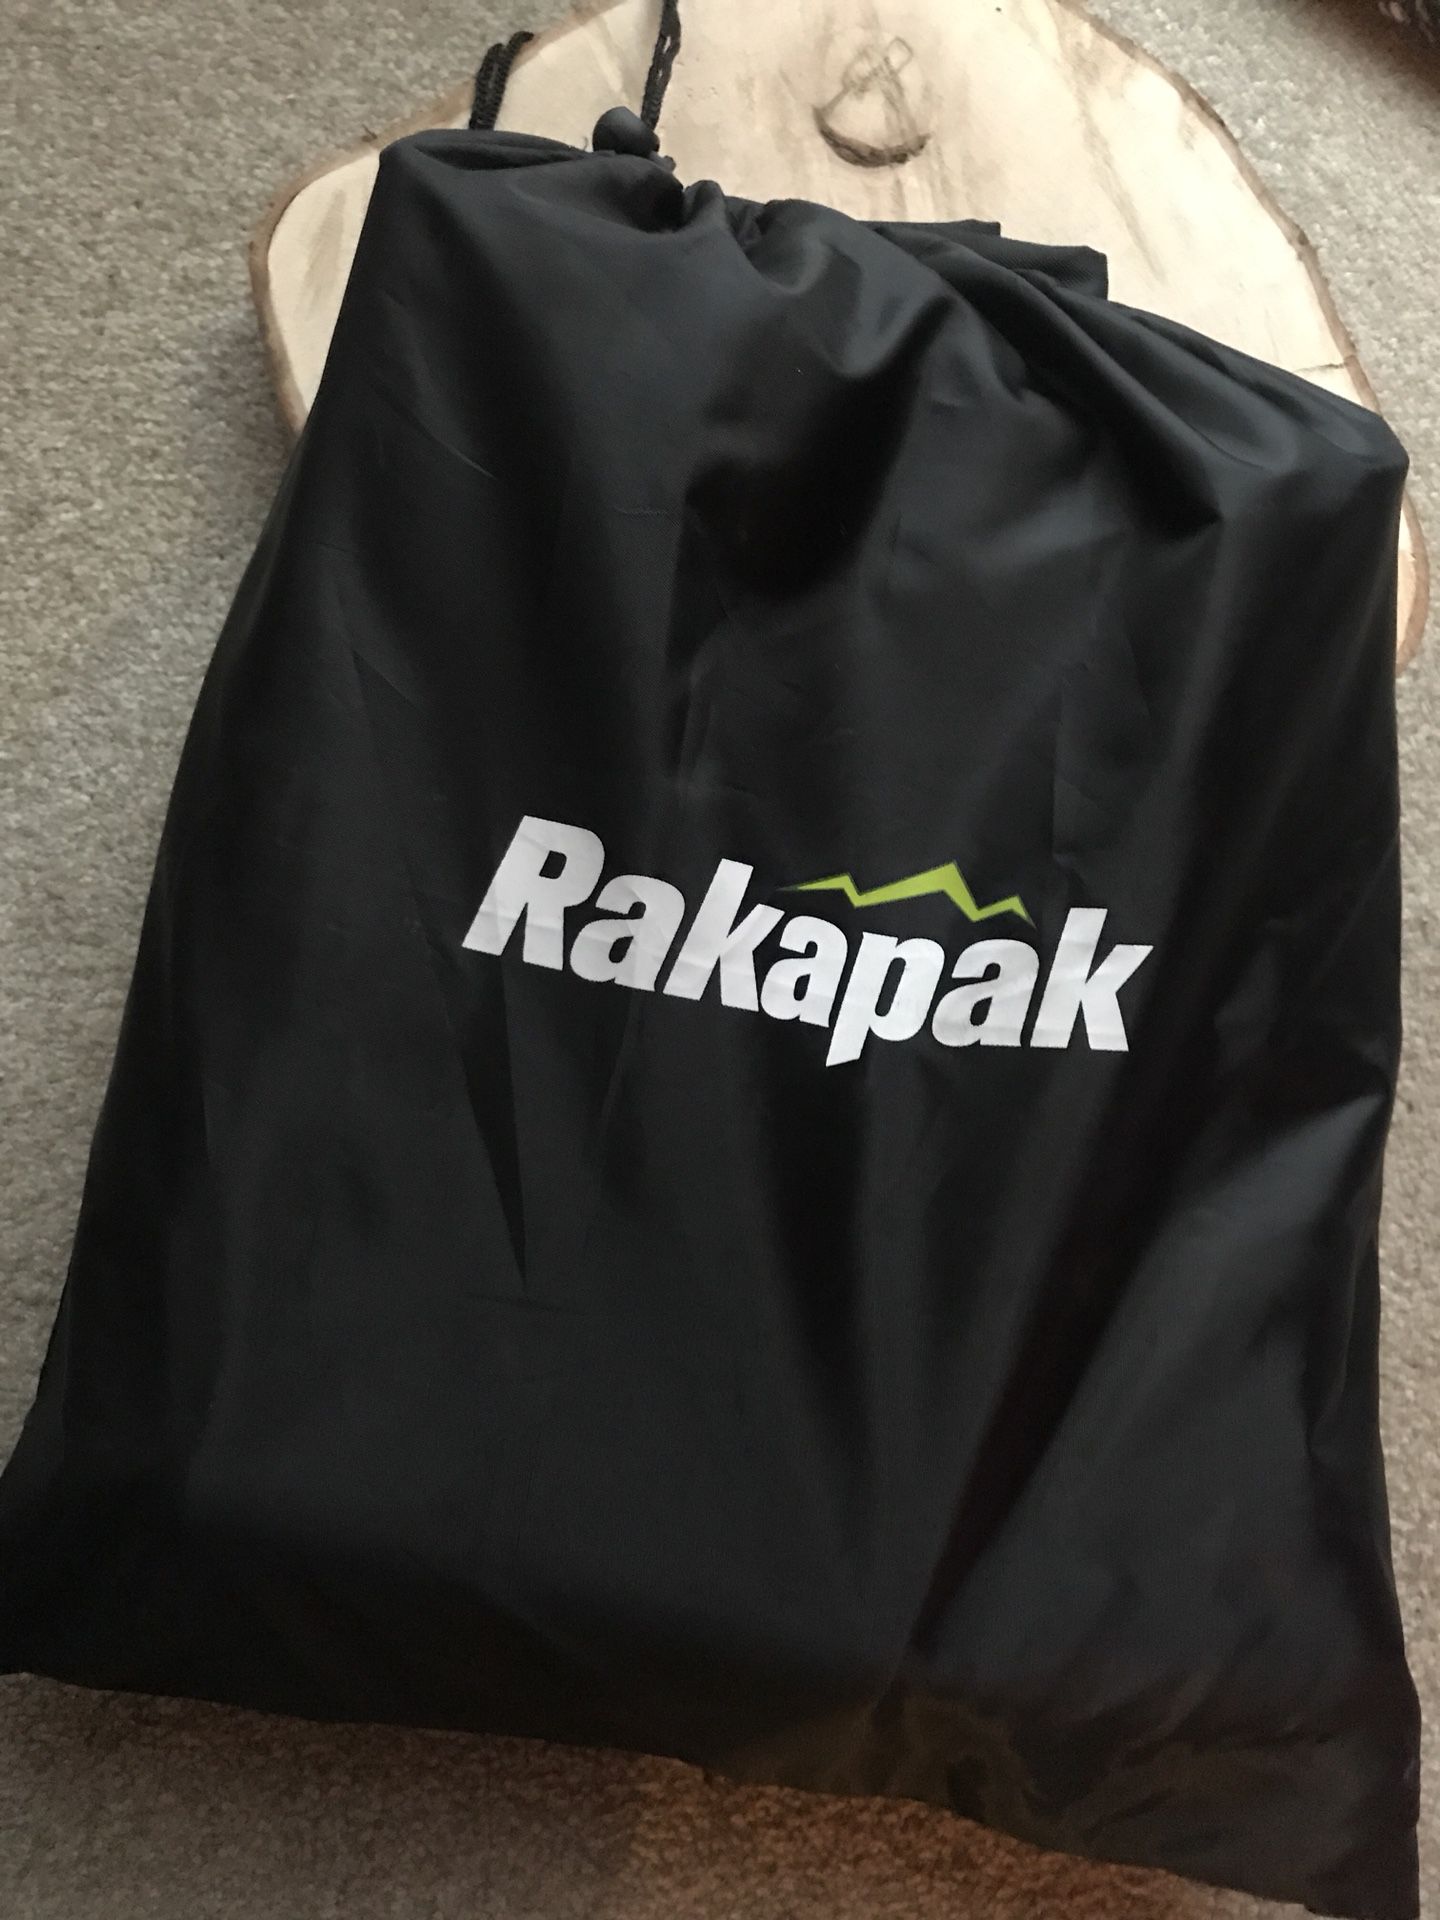 Reserved for Purchase / Rakapak Inflatable Roof Rack (Soft Rack)